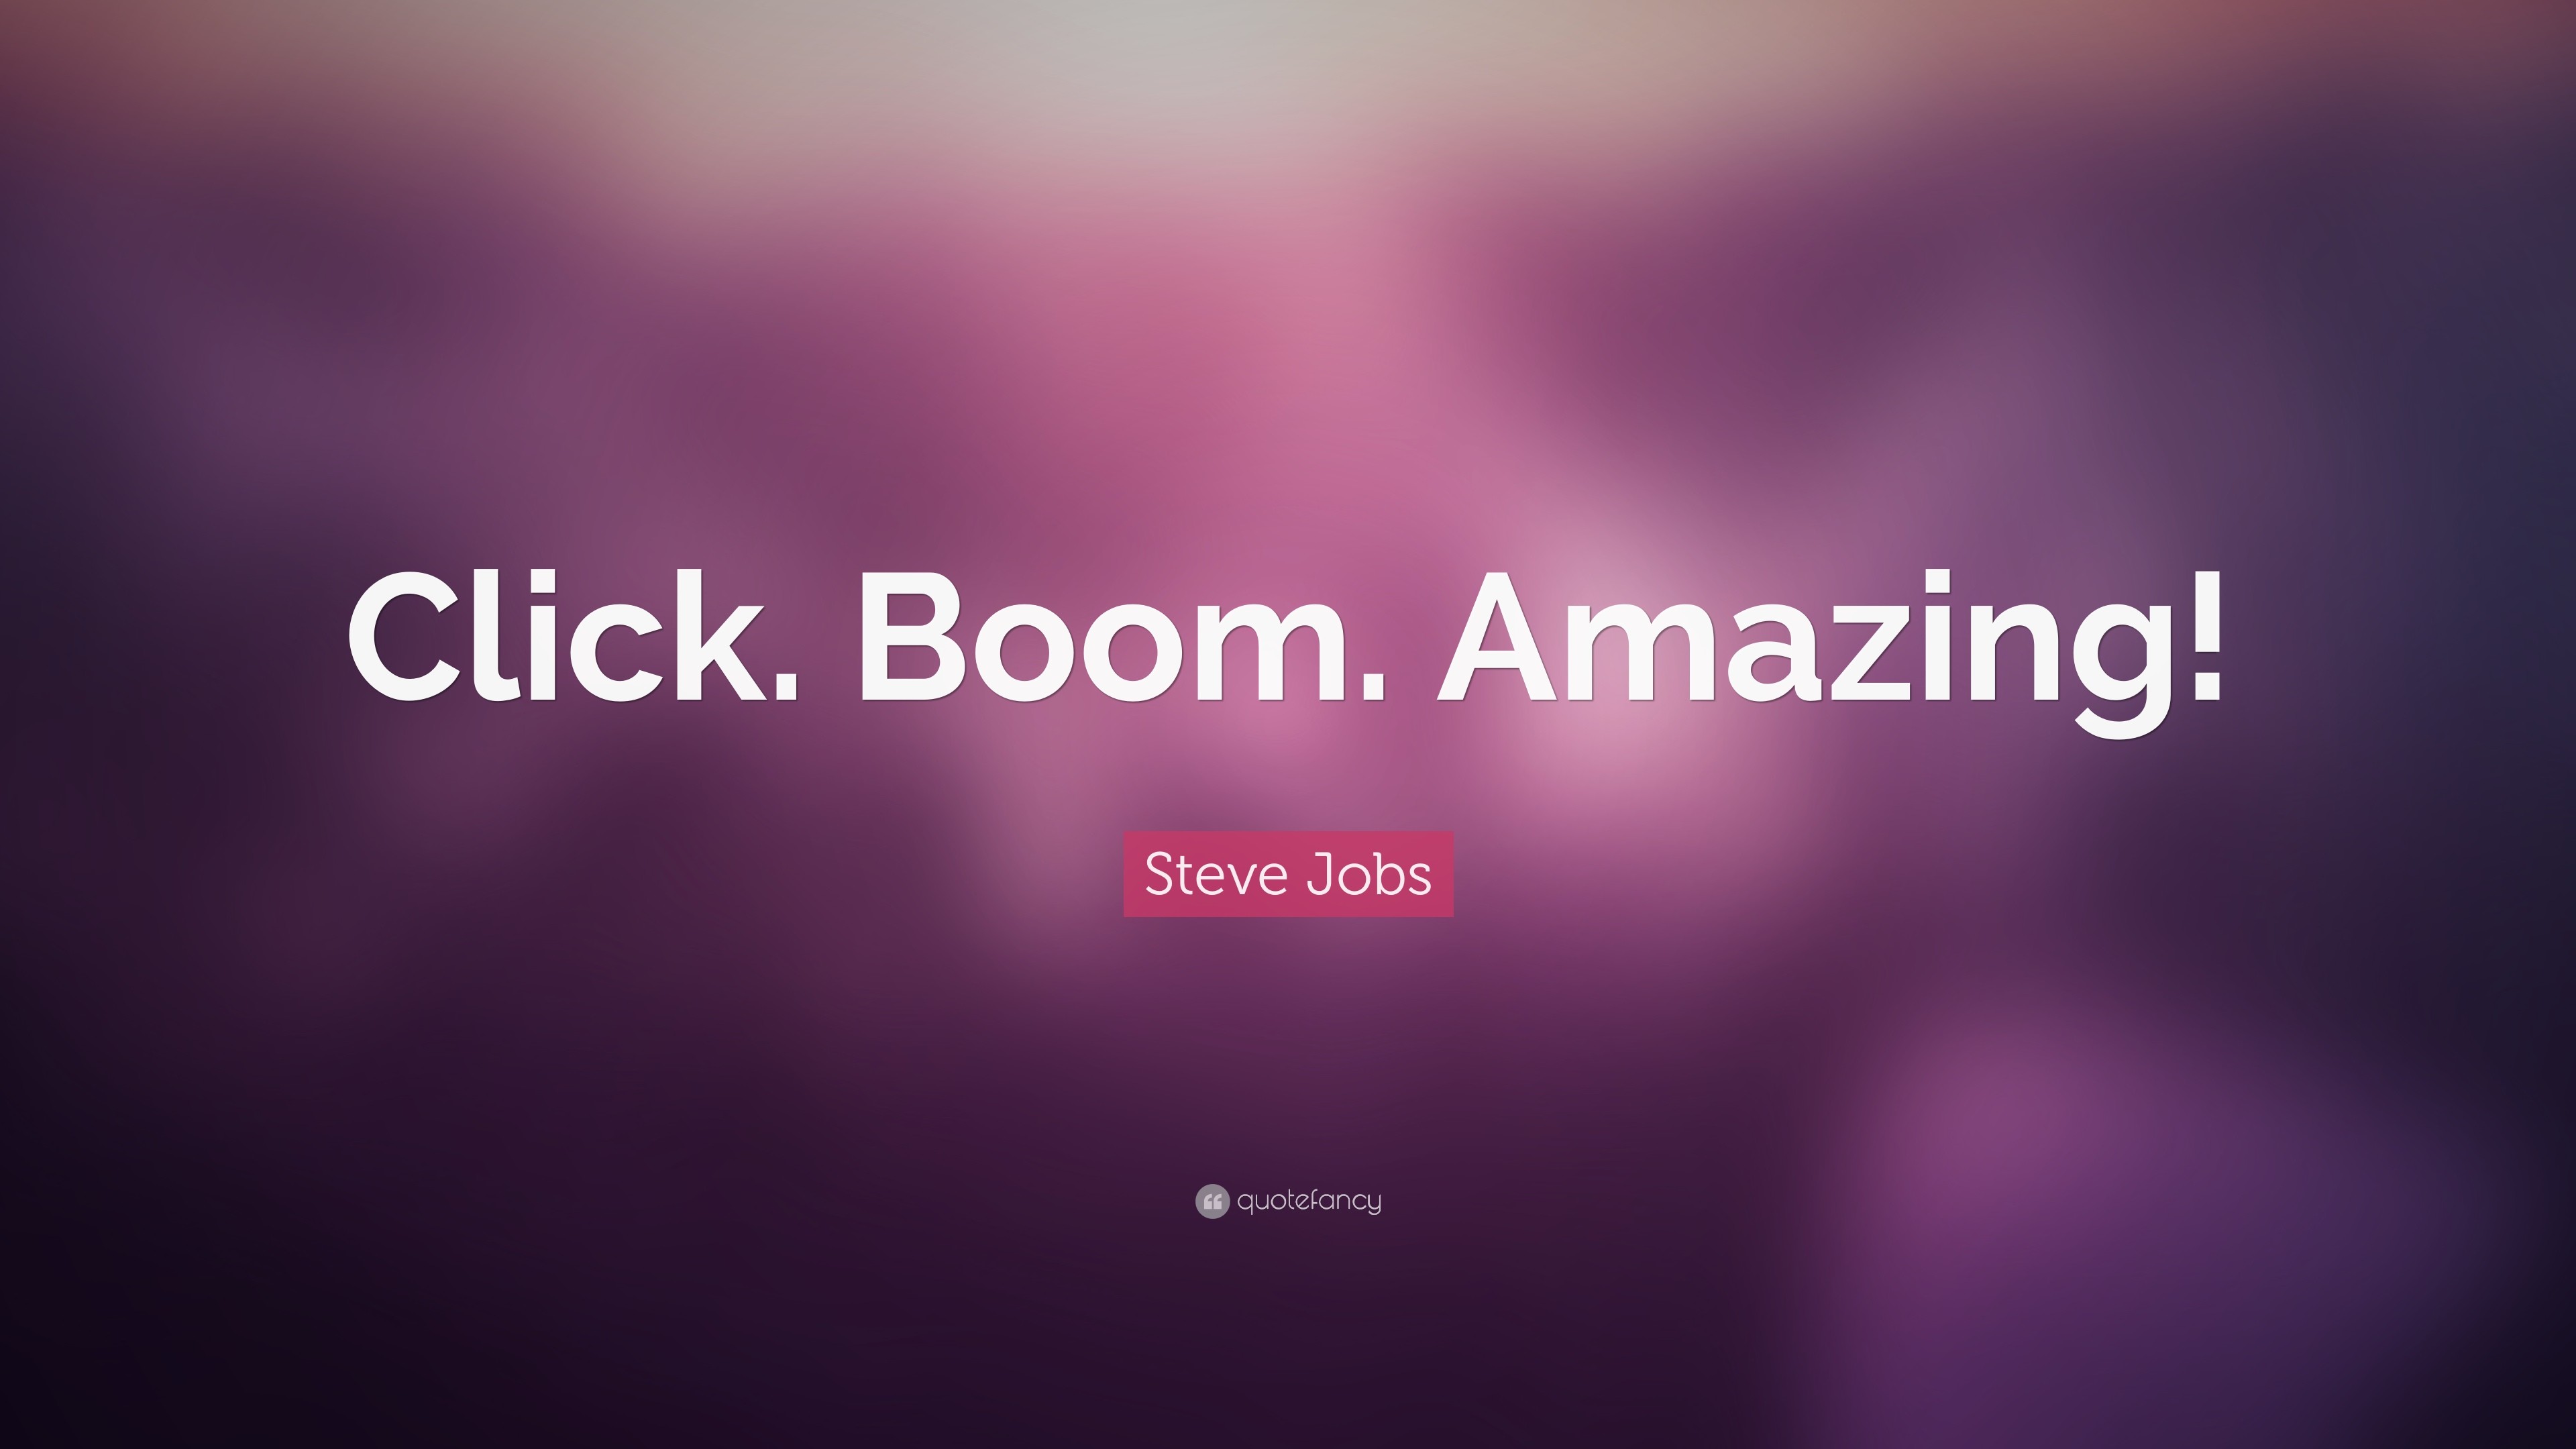 3840x2160 Steve Jobs Quote: “Click. Boom. Amazing!”